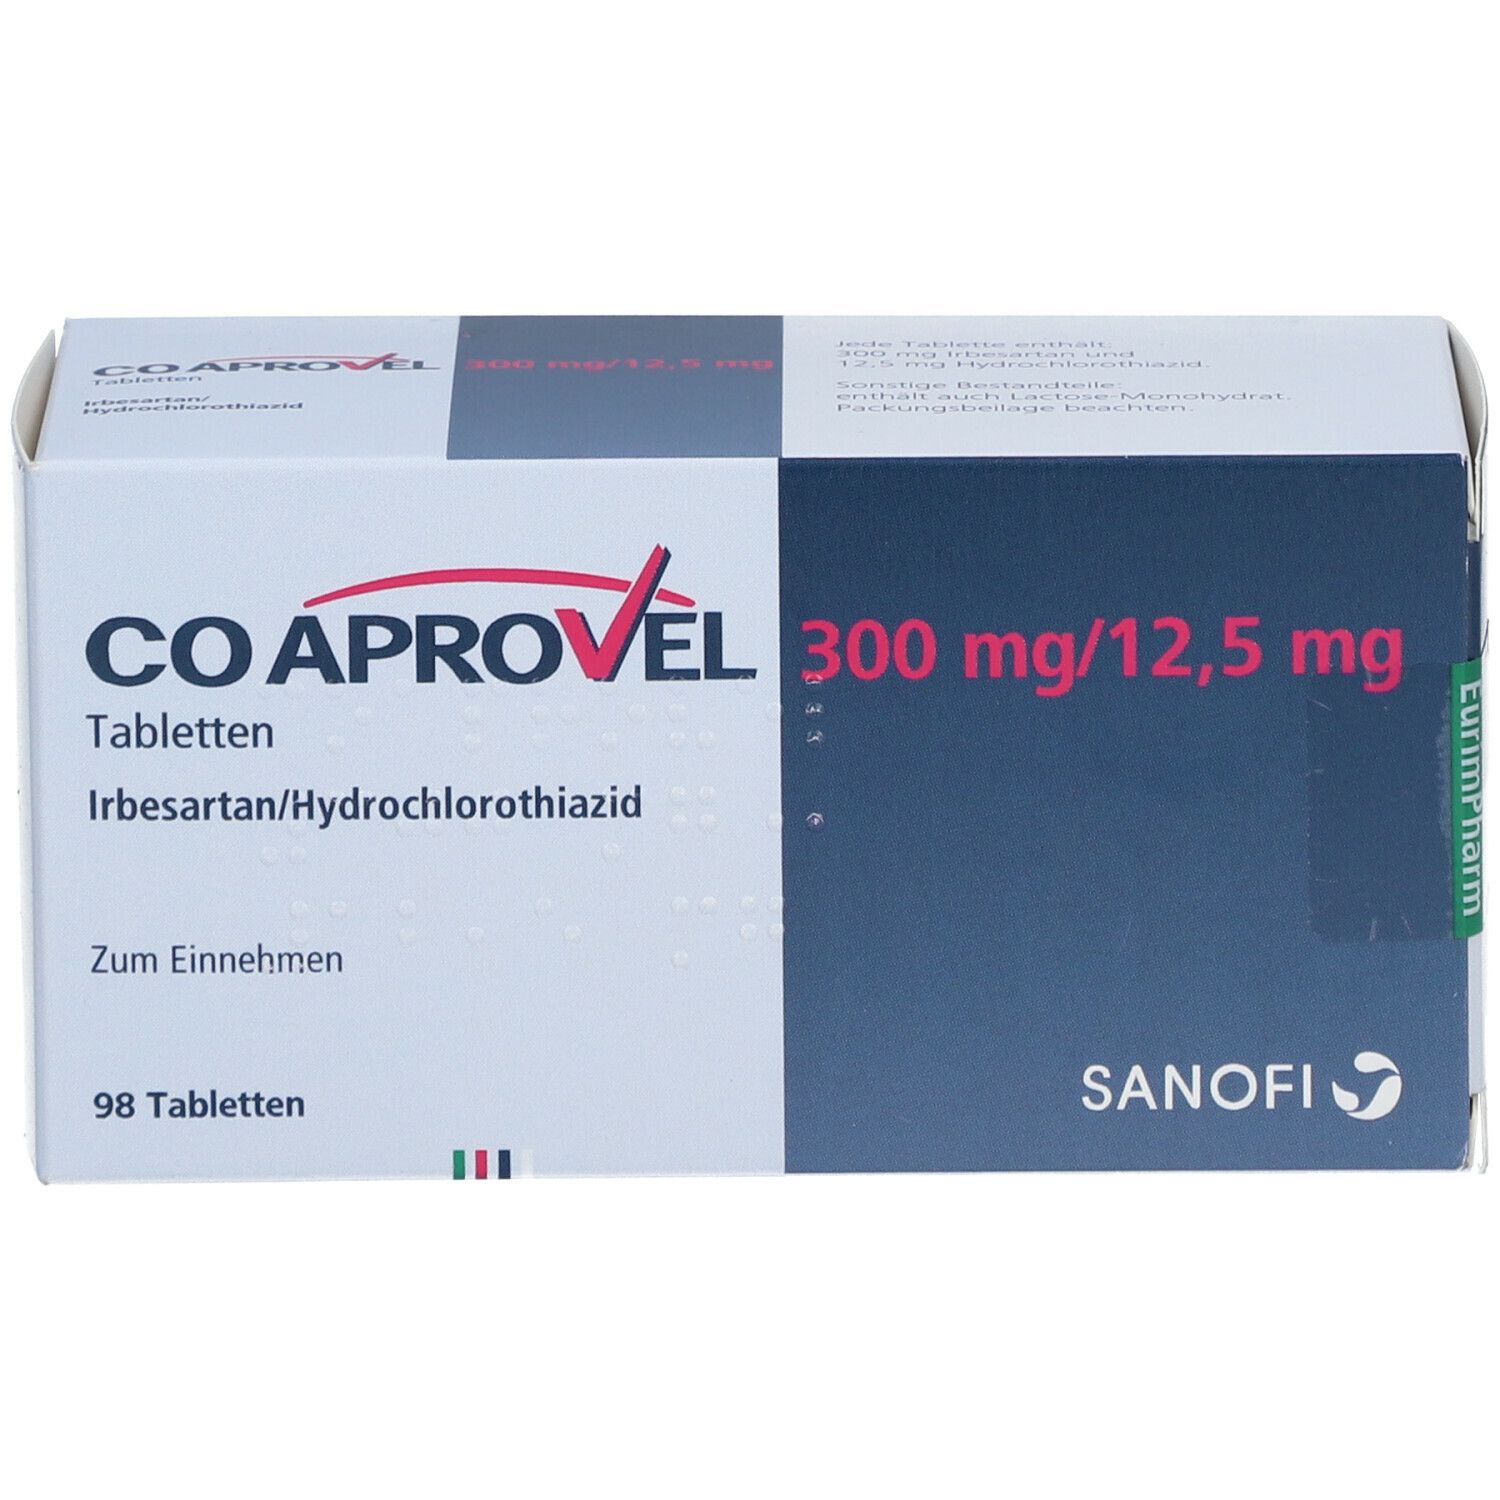 Coaprovel 300 mg/12,5 mg